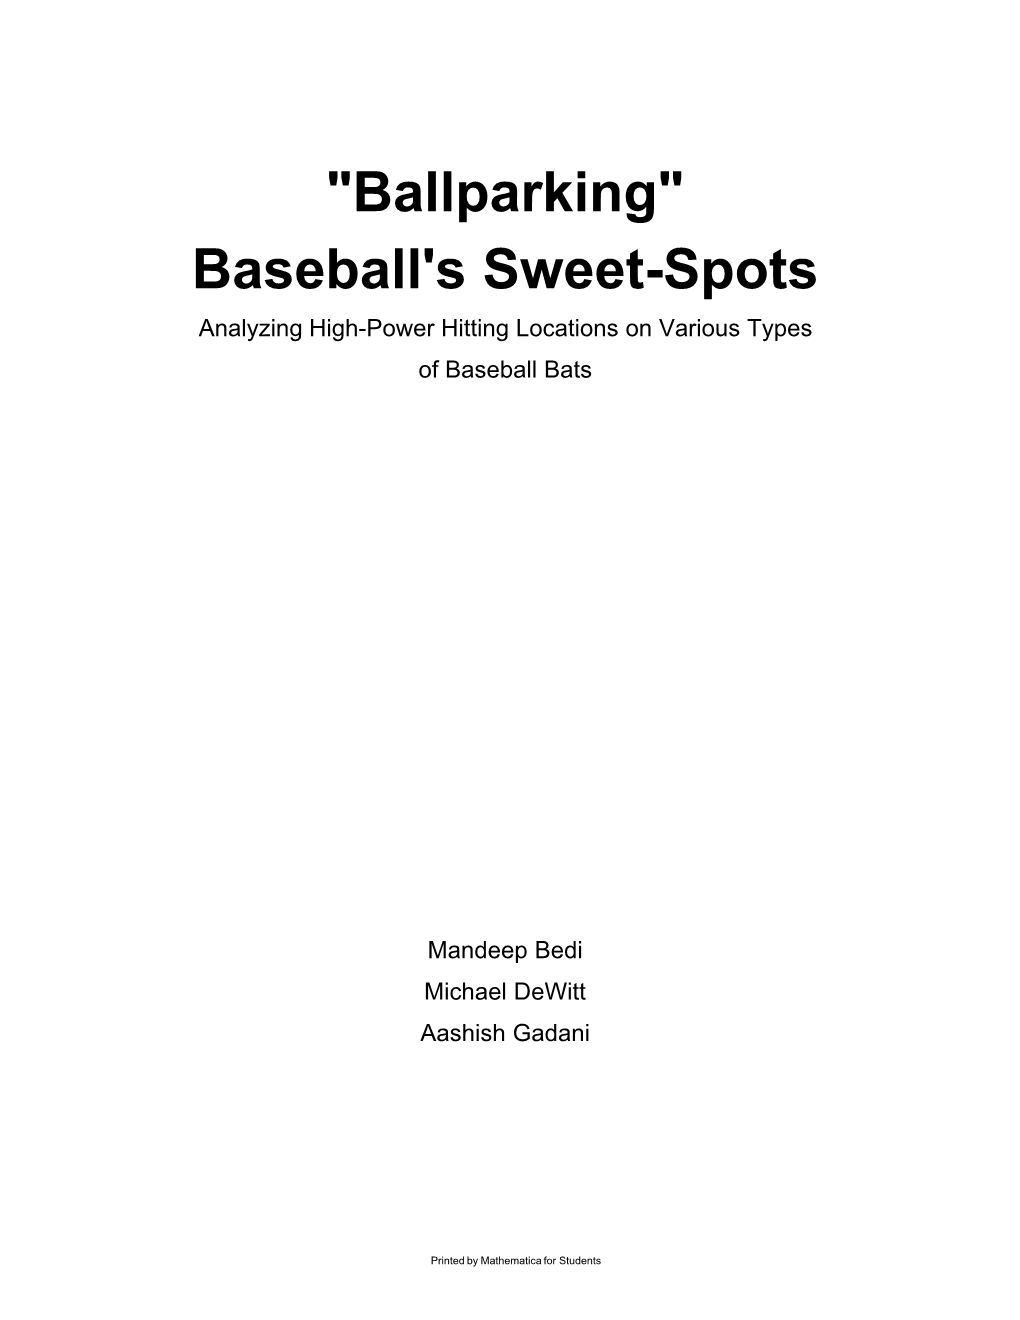 "Ballparking" Baseball's Sweet-Spots Analyzing High-Power Hitting Locations on Various Types of Baseball Bats